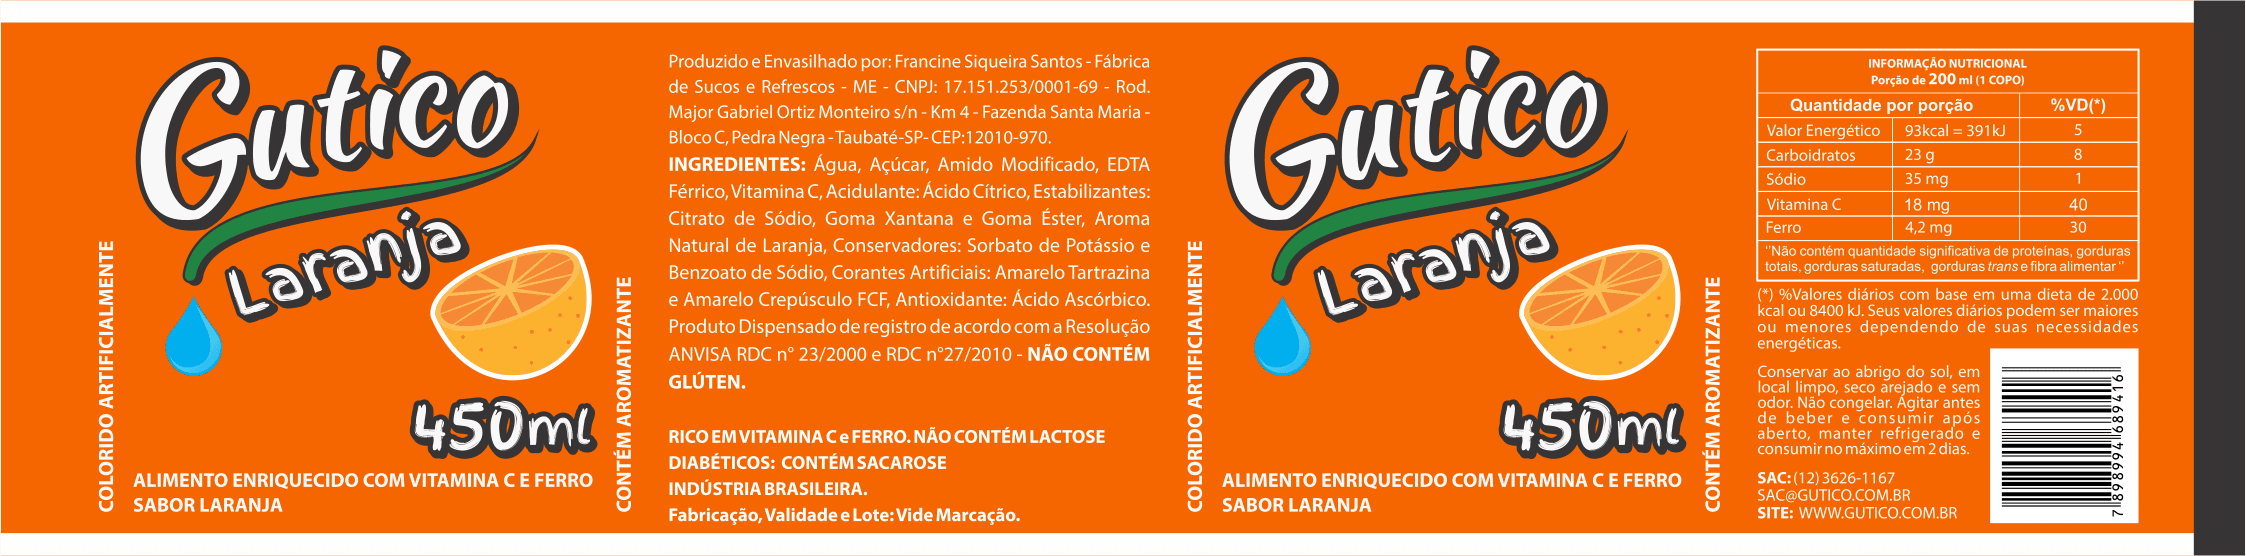 Gutico Refrescos - Refresco sabor laranja